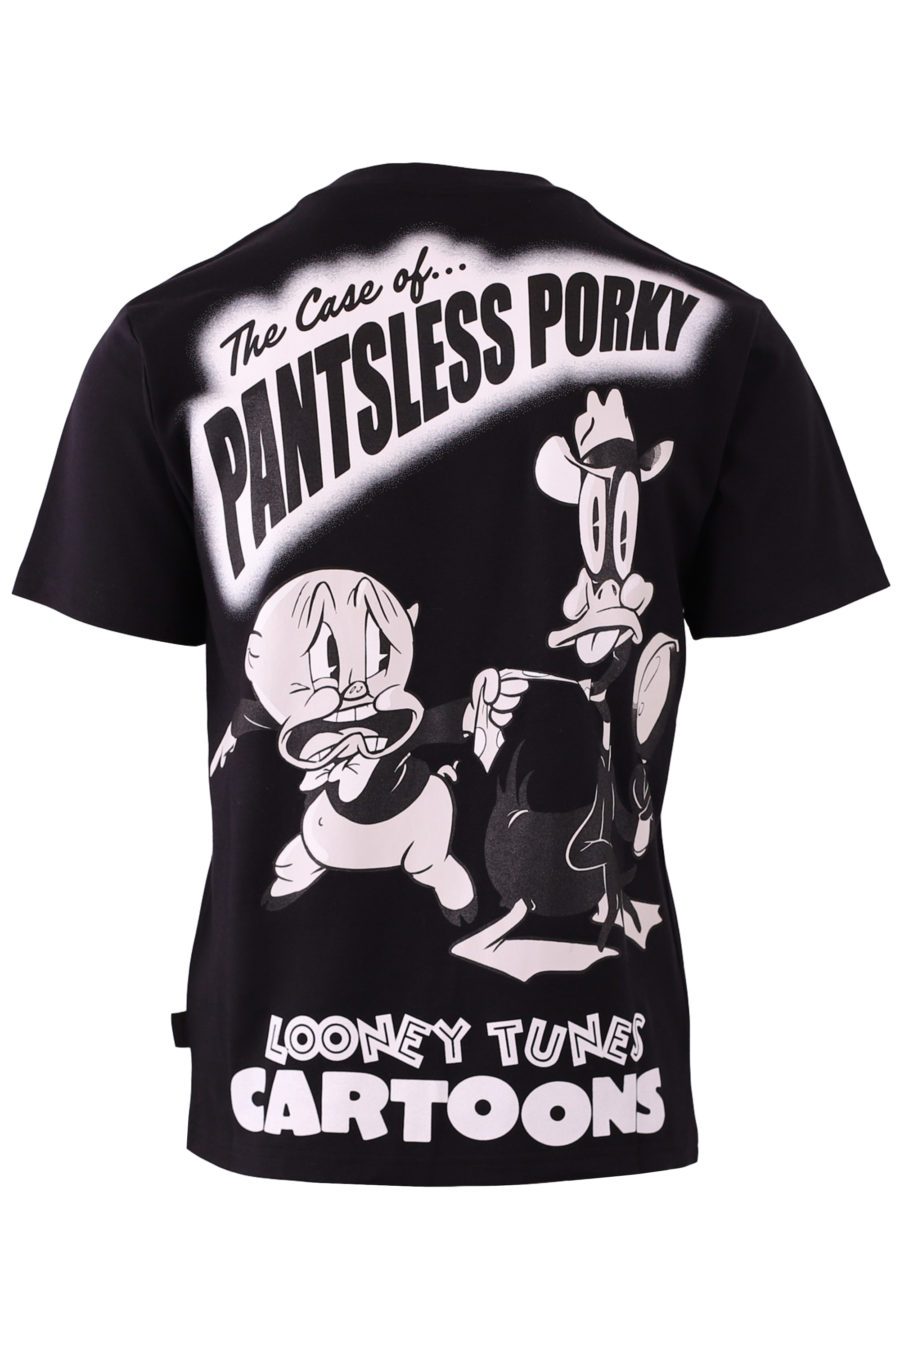 Looney Tunes schwarzes T-shirt - 2c6b0246a02bfa3141397e27c507de0b0ecddee4